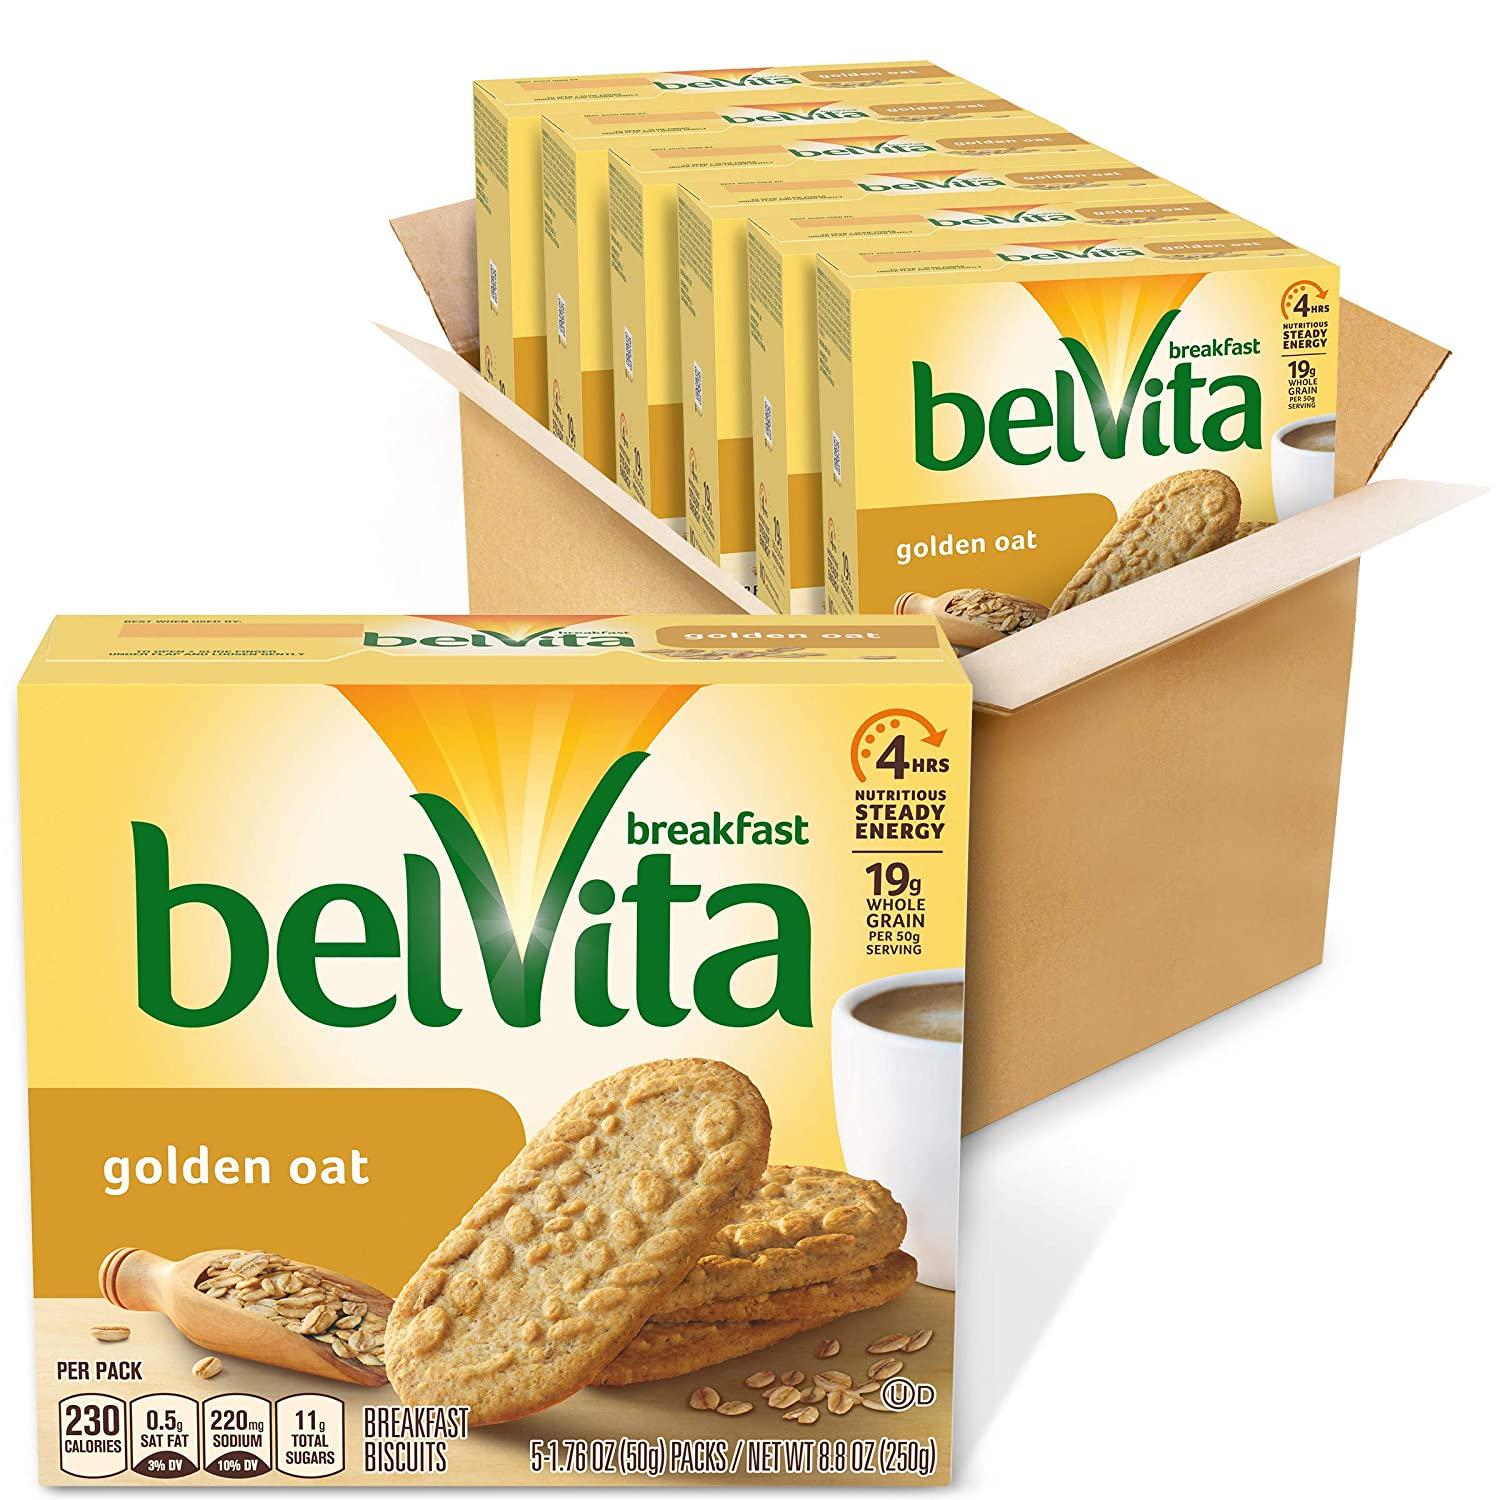 30 belVita Golden Oat Breakfast Biscuits for $11.40 Shipped